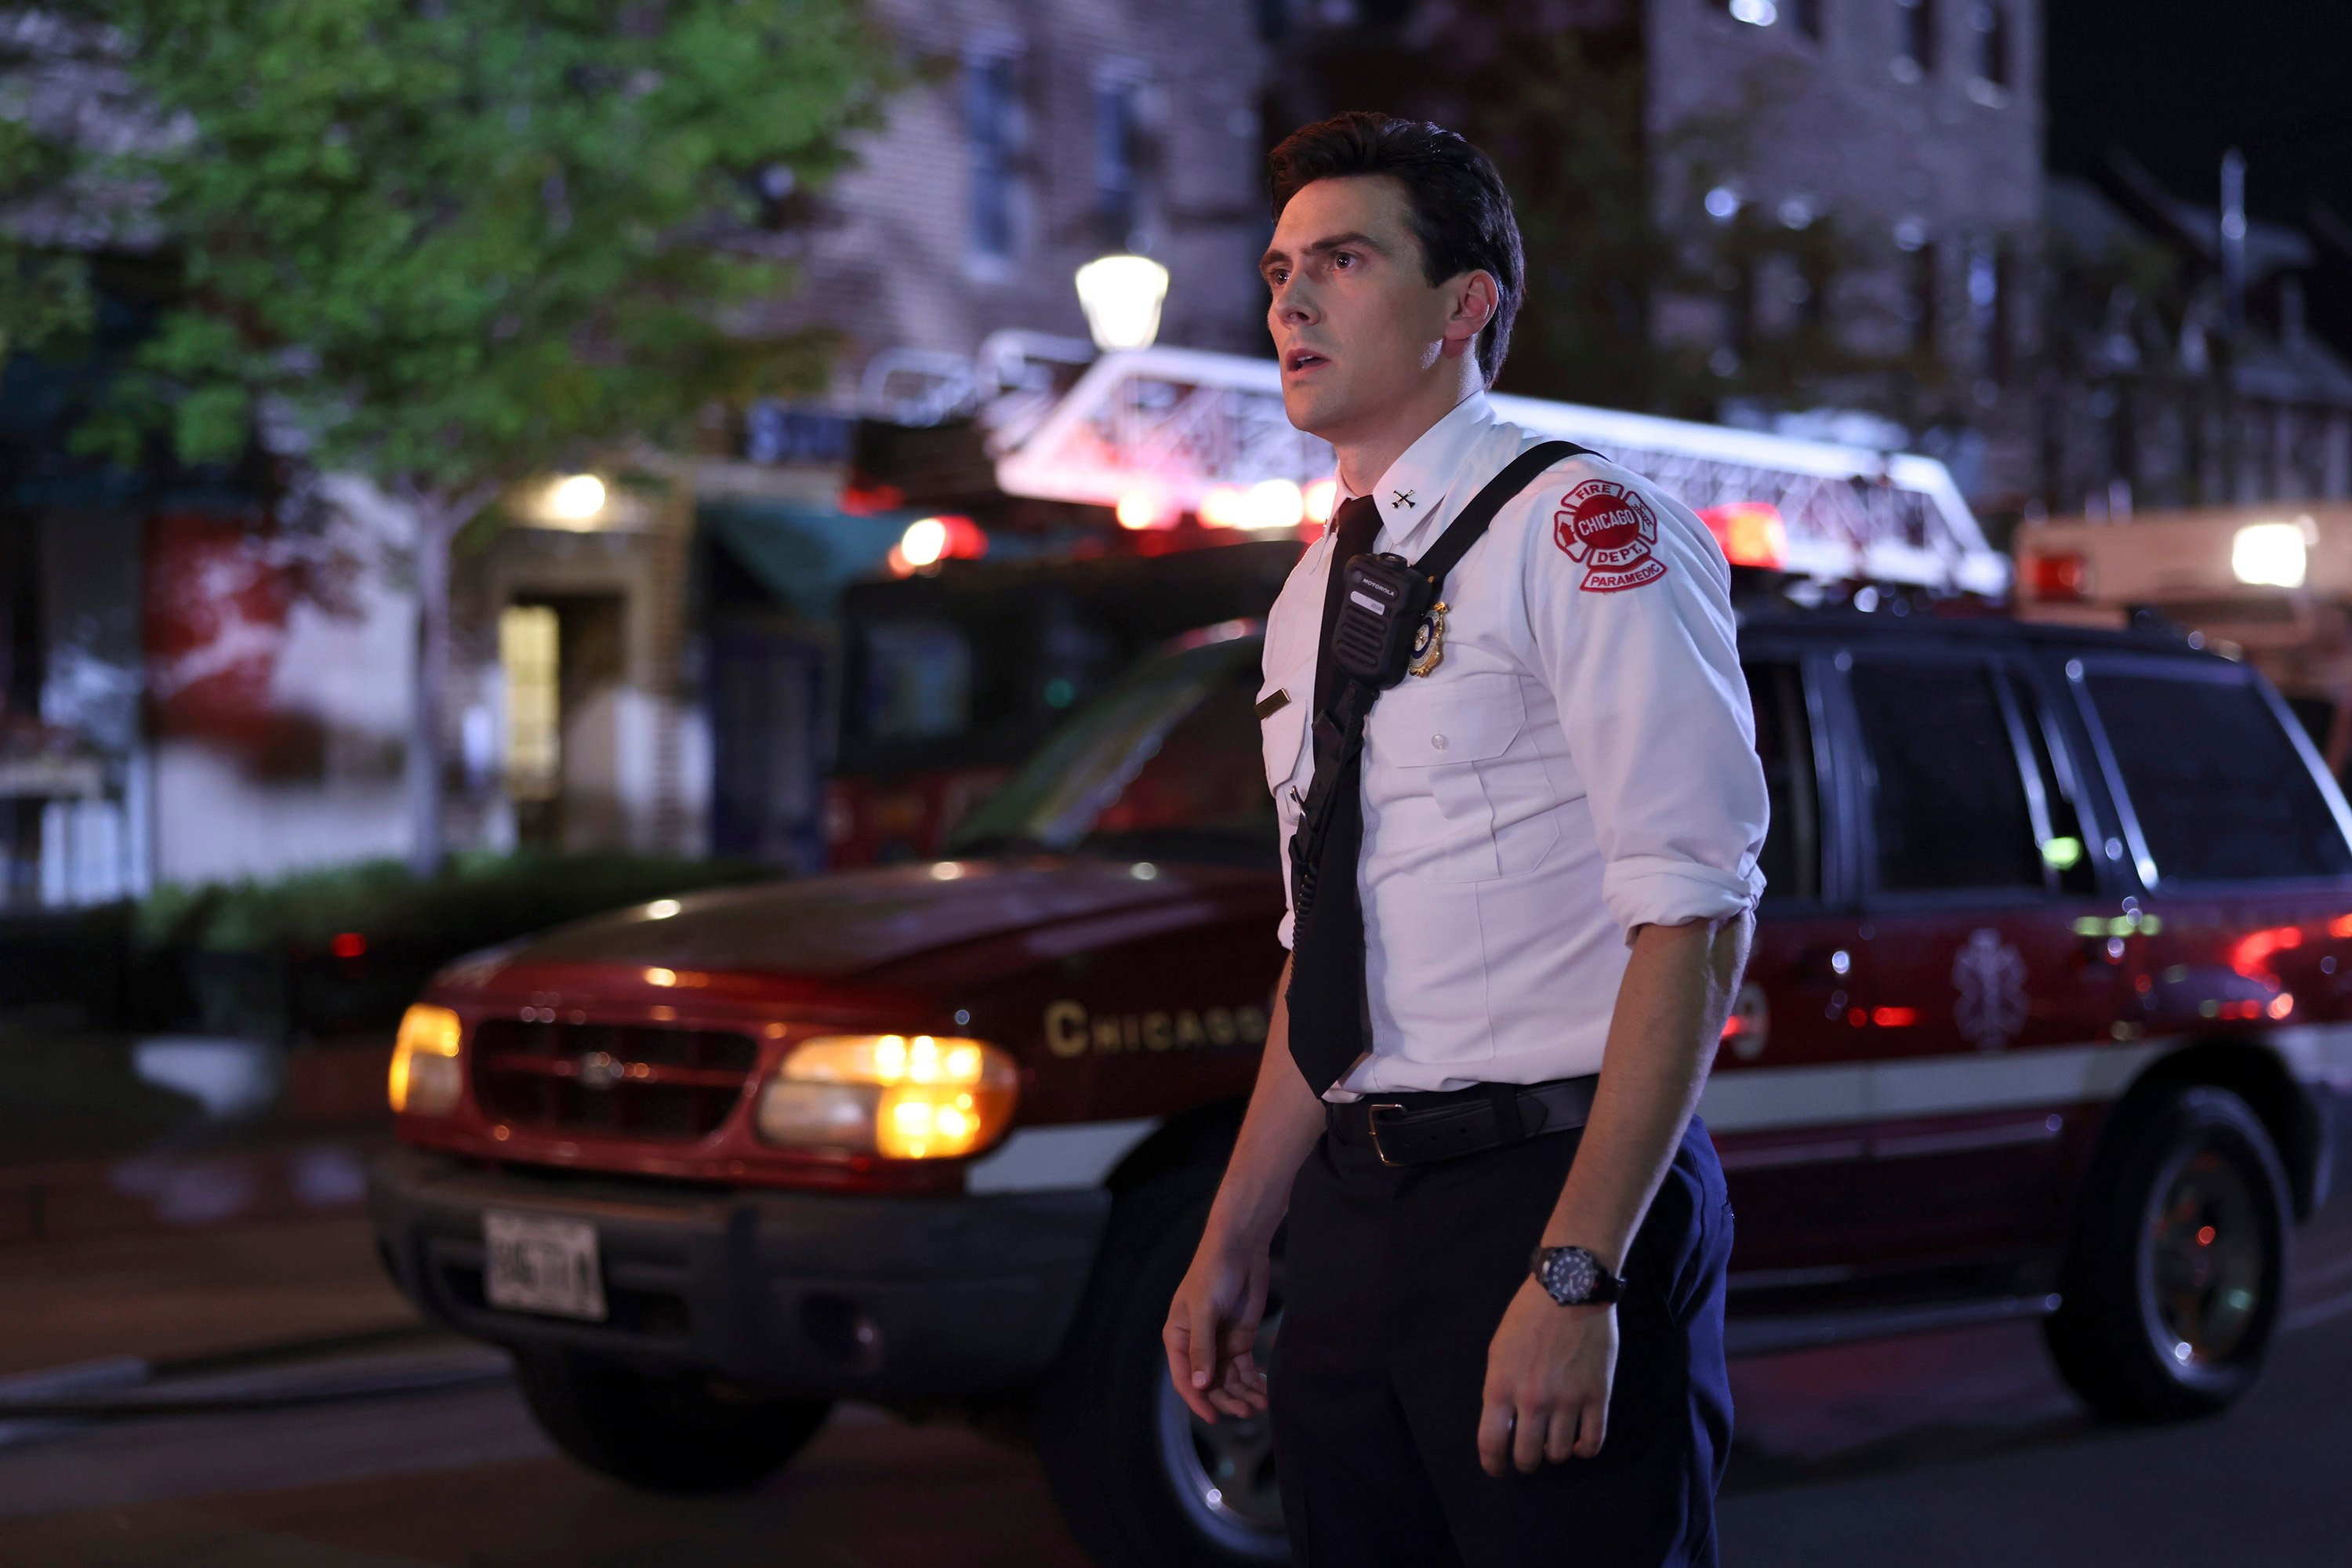 Jimmy Nicholas in uniform as Evan Hawkins in 'Chicago Fire' Season 11 Episode 3